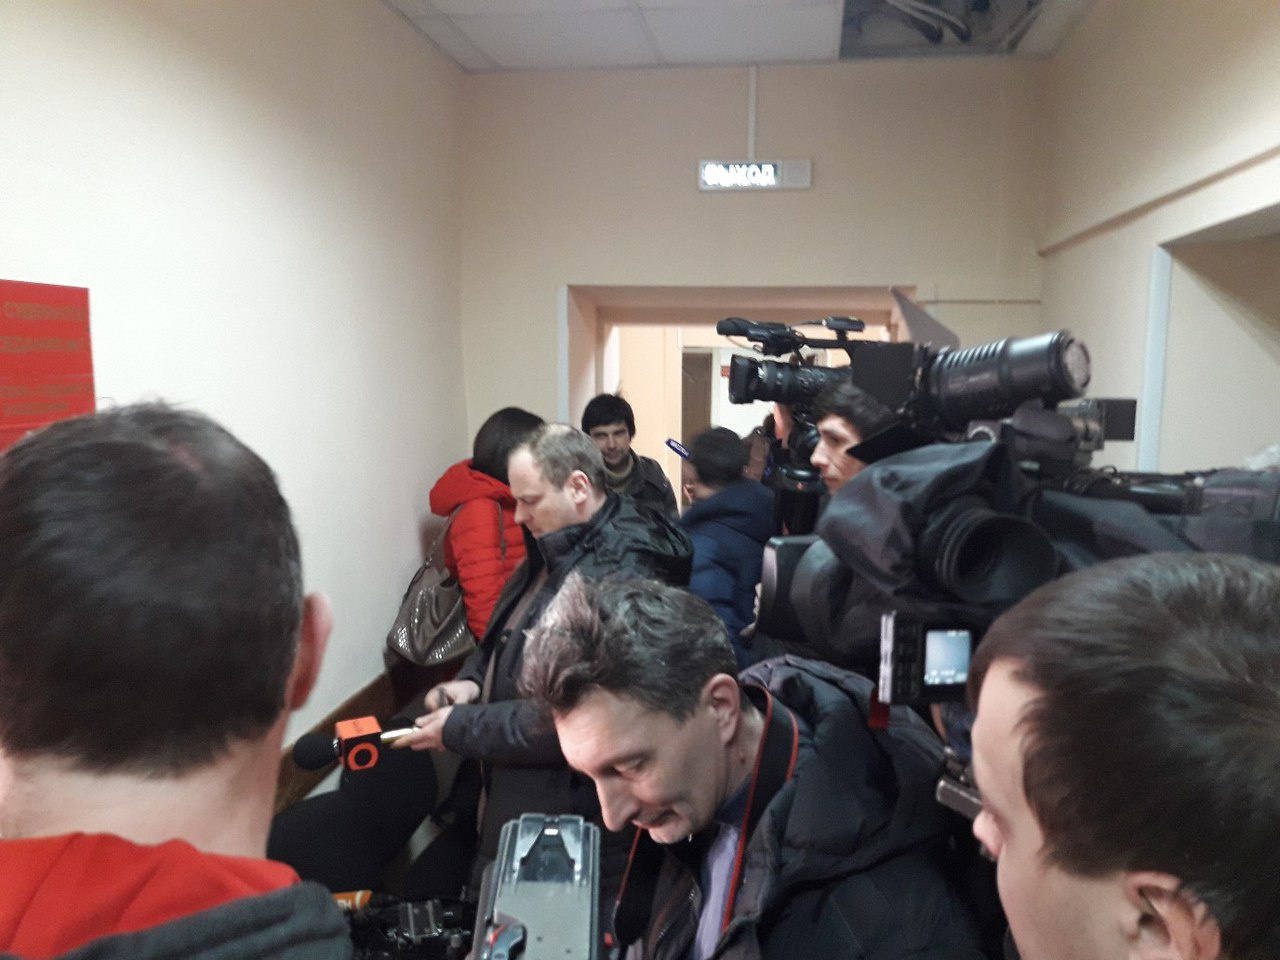 Все представители СМИ ждут, как прокомментирует ситуацию сам Александр Кирилин